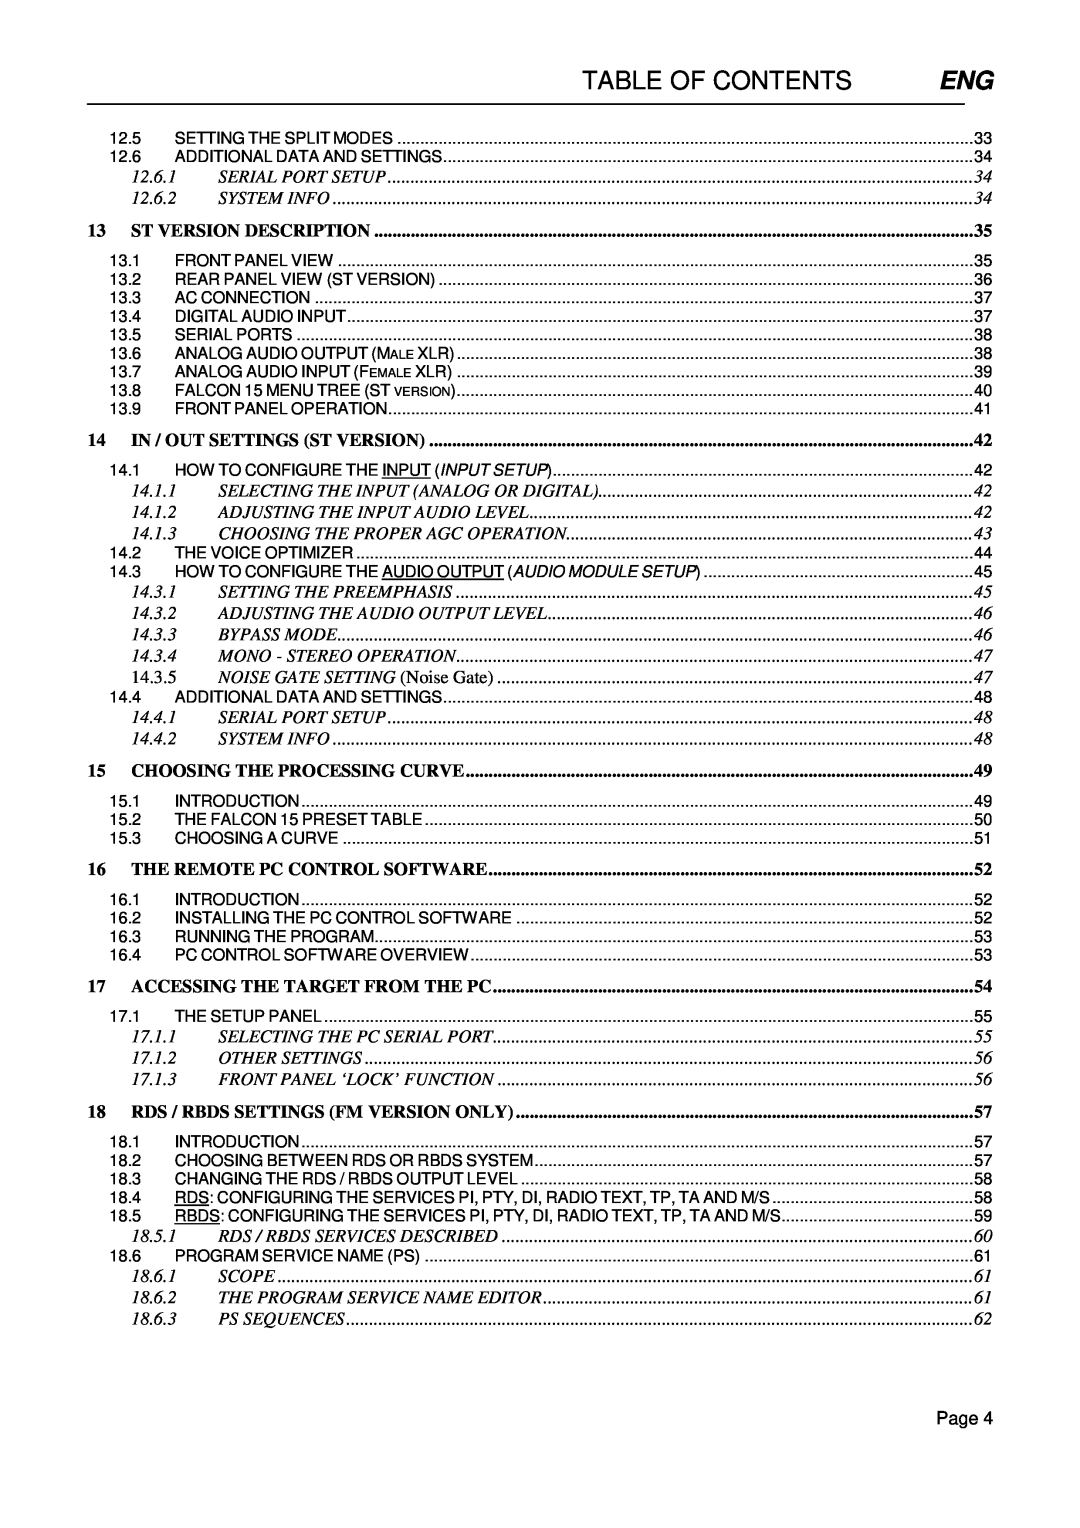 Falcon 15 manual Table Of Contents, St Version Description 